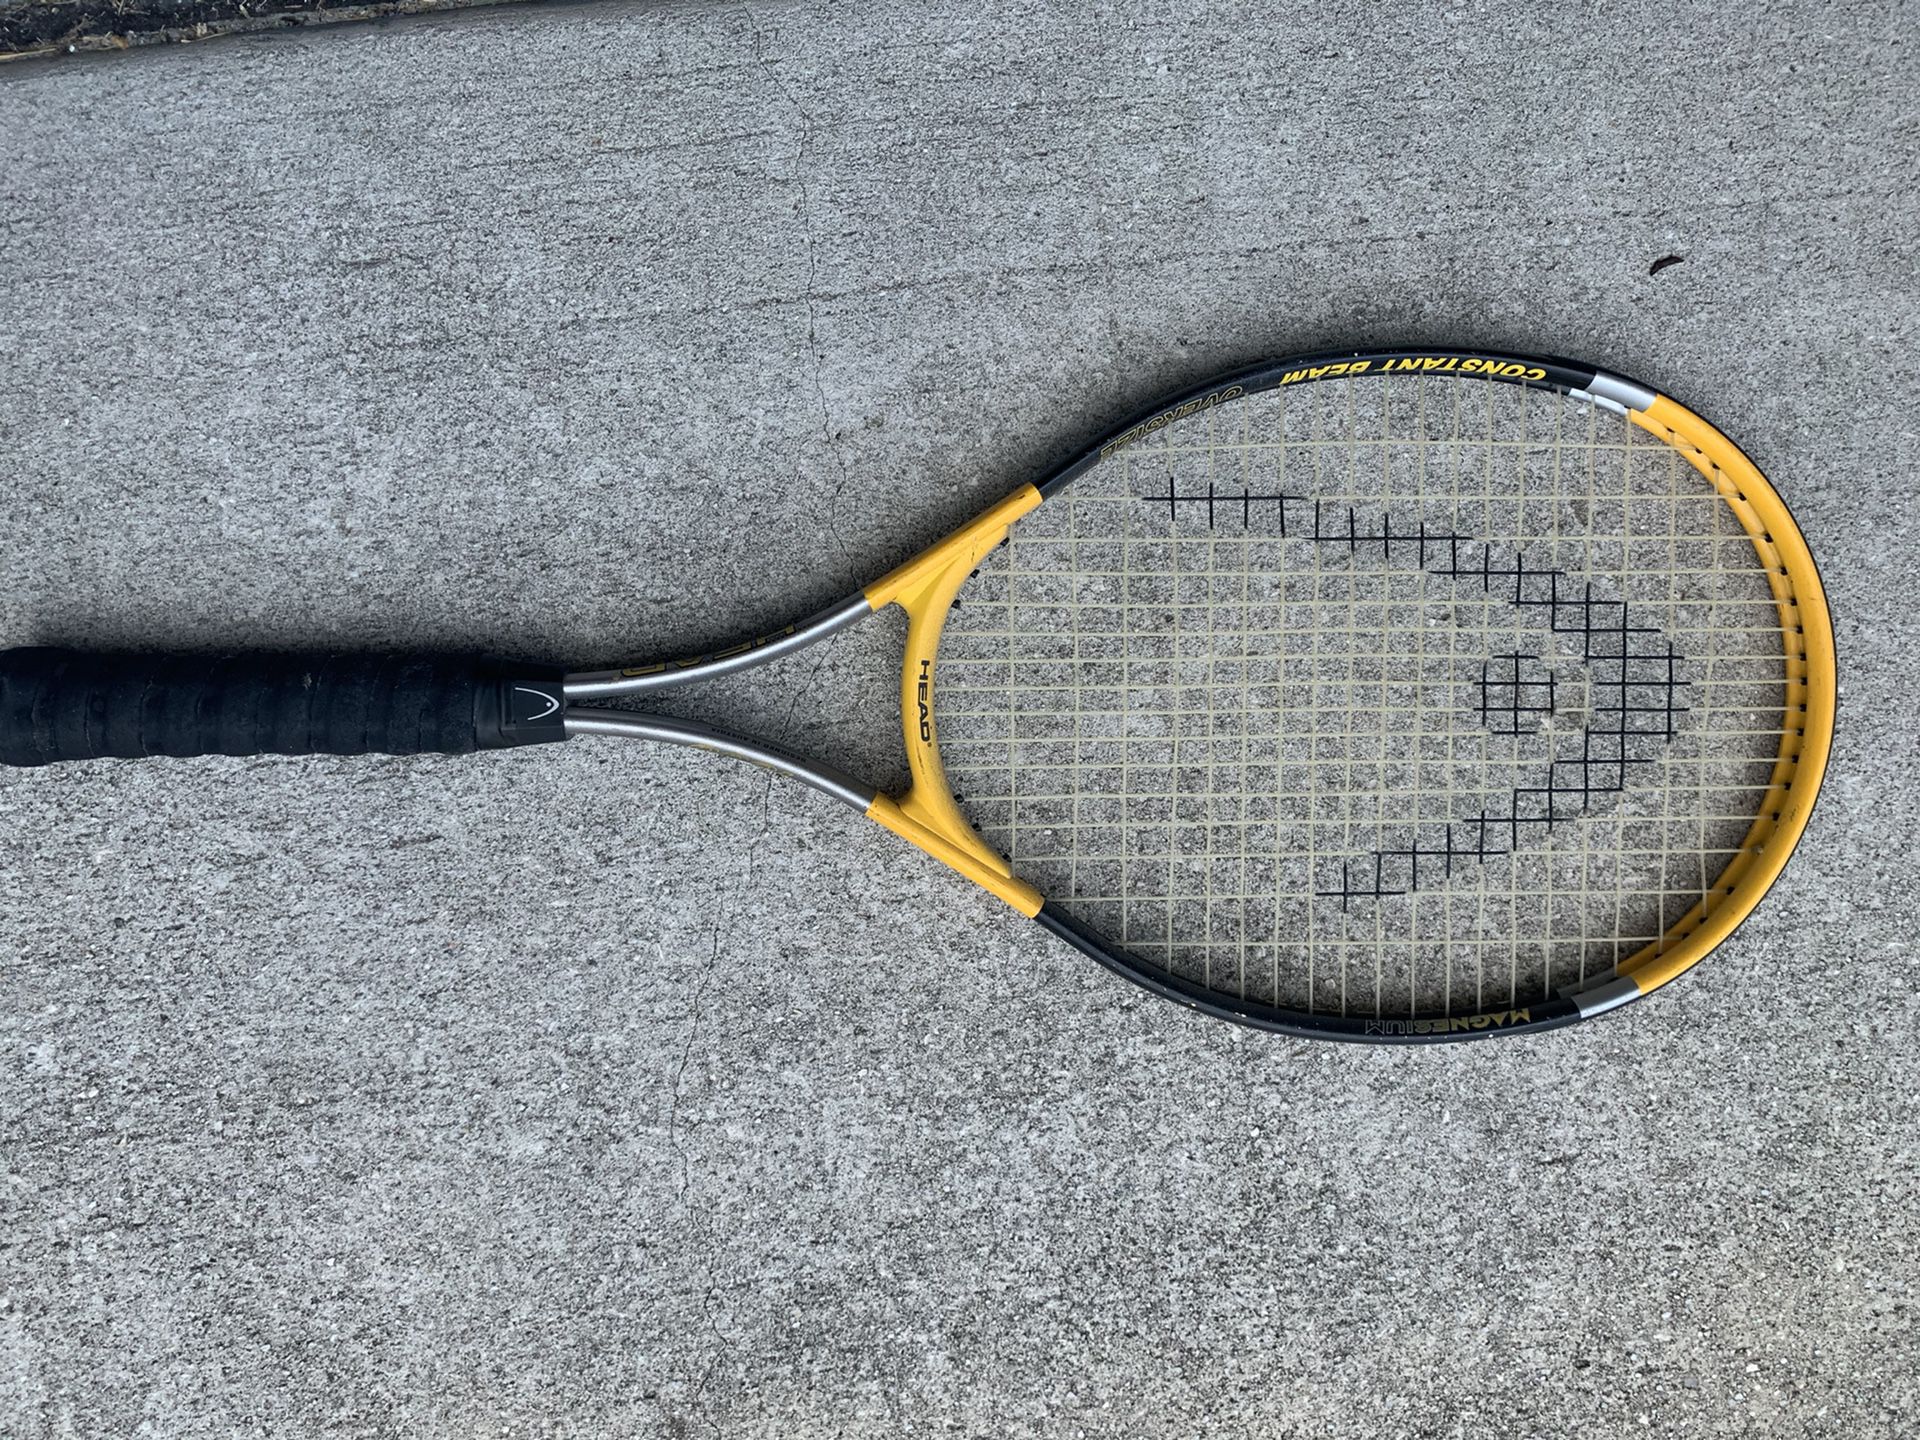 Head tennis racket